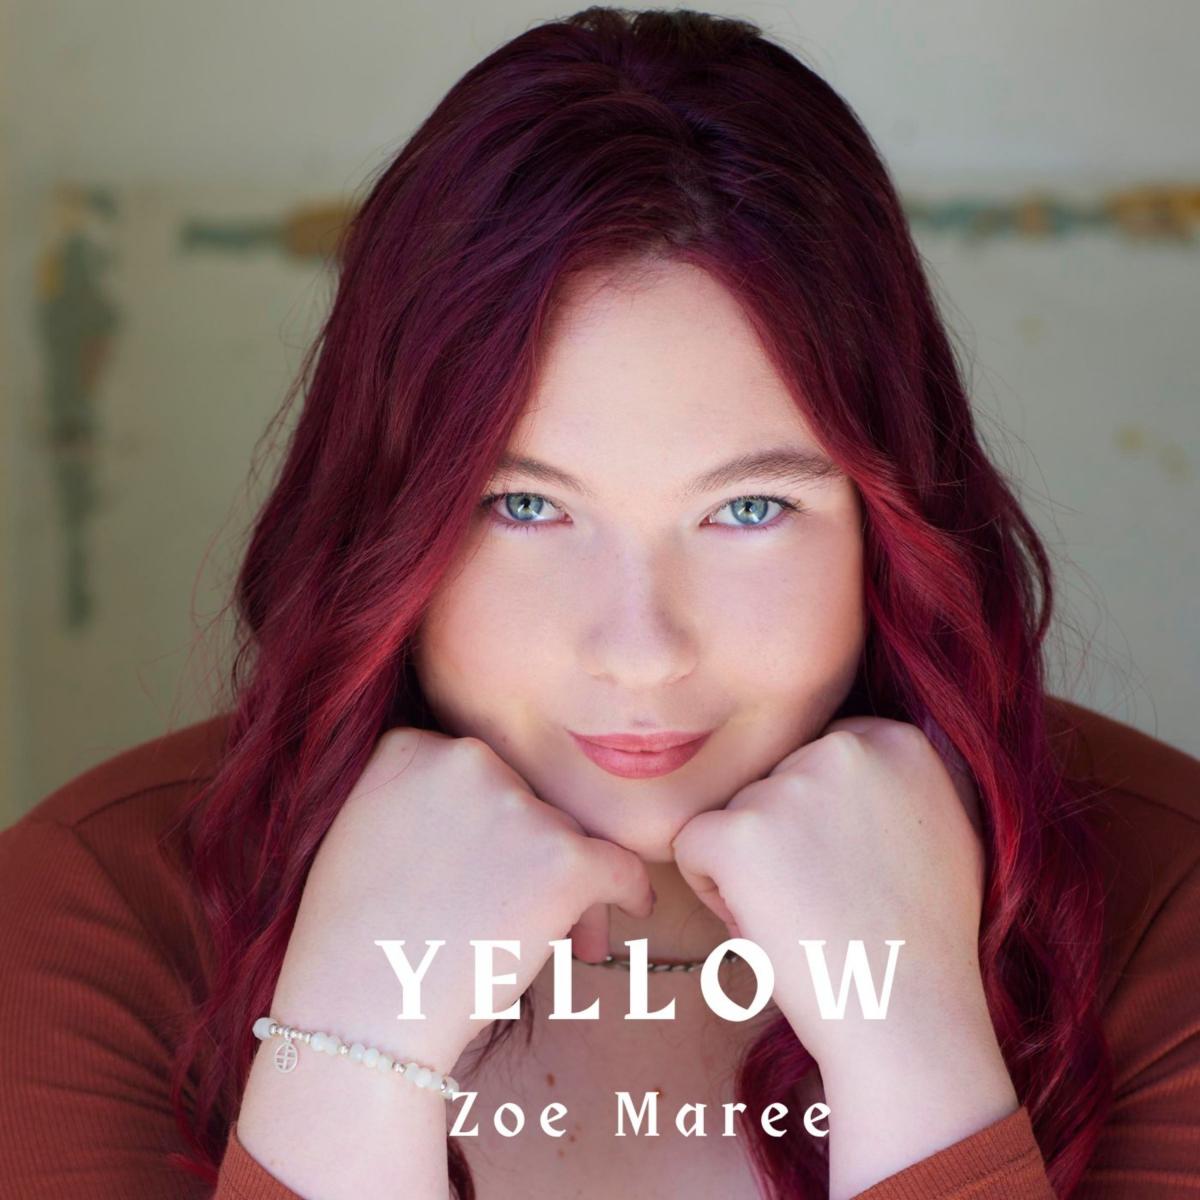 Yellow by Zoe Maree